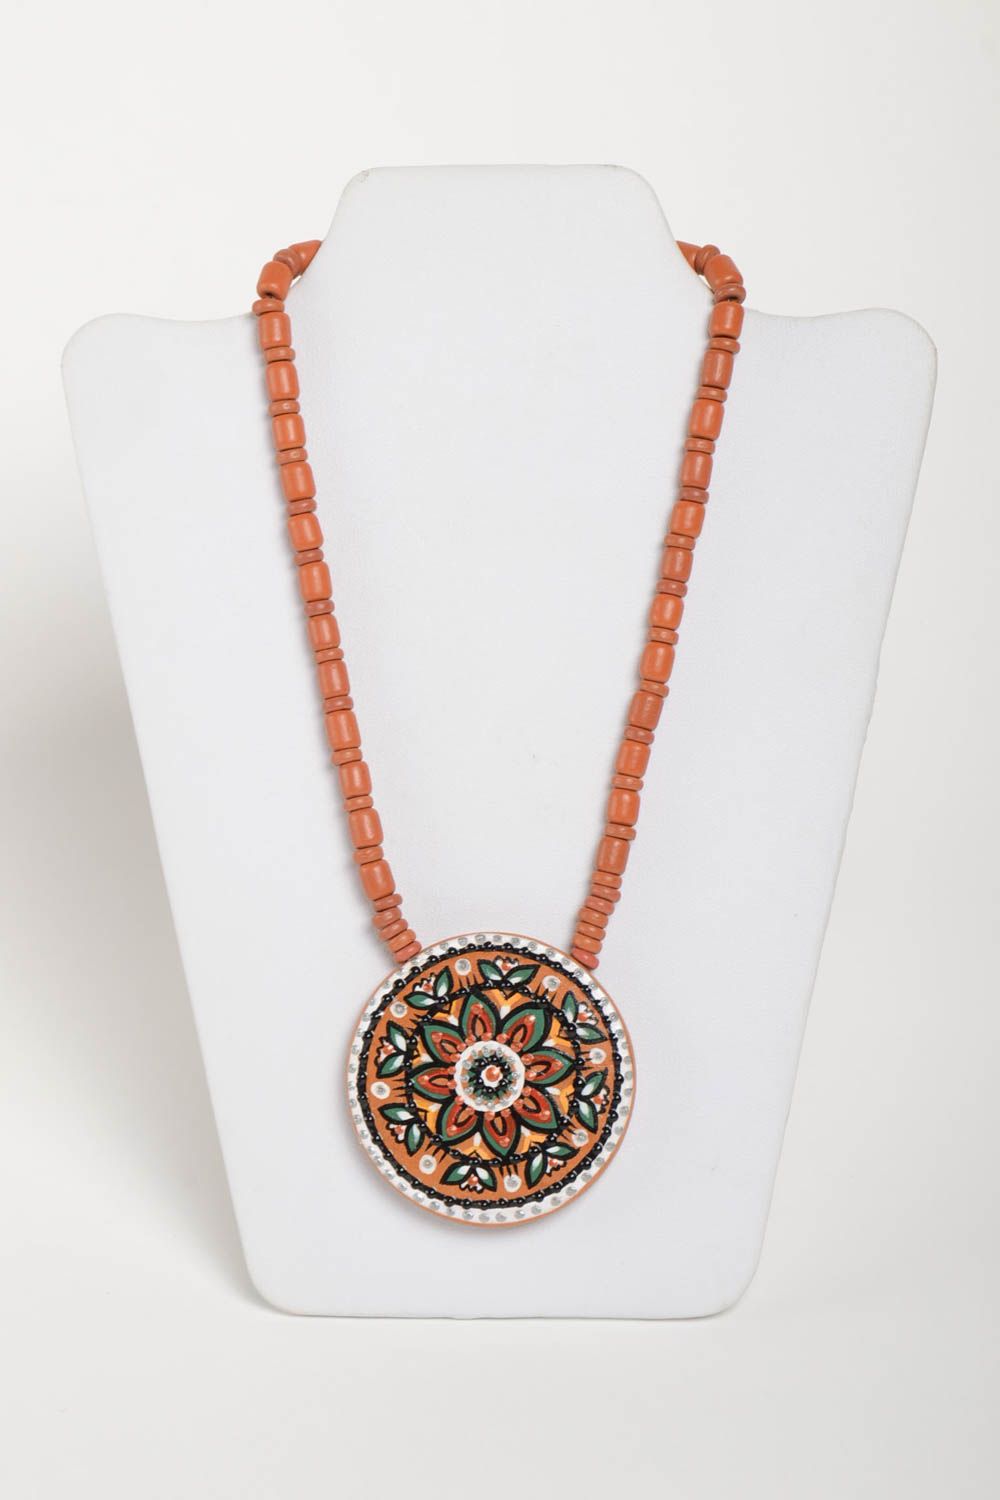 Handmade necklace pendant necklace ceramic jewelry ethnic jewelry gift for mom photo 2